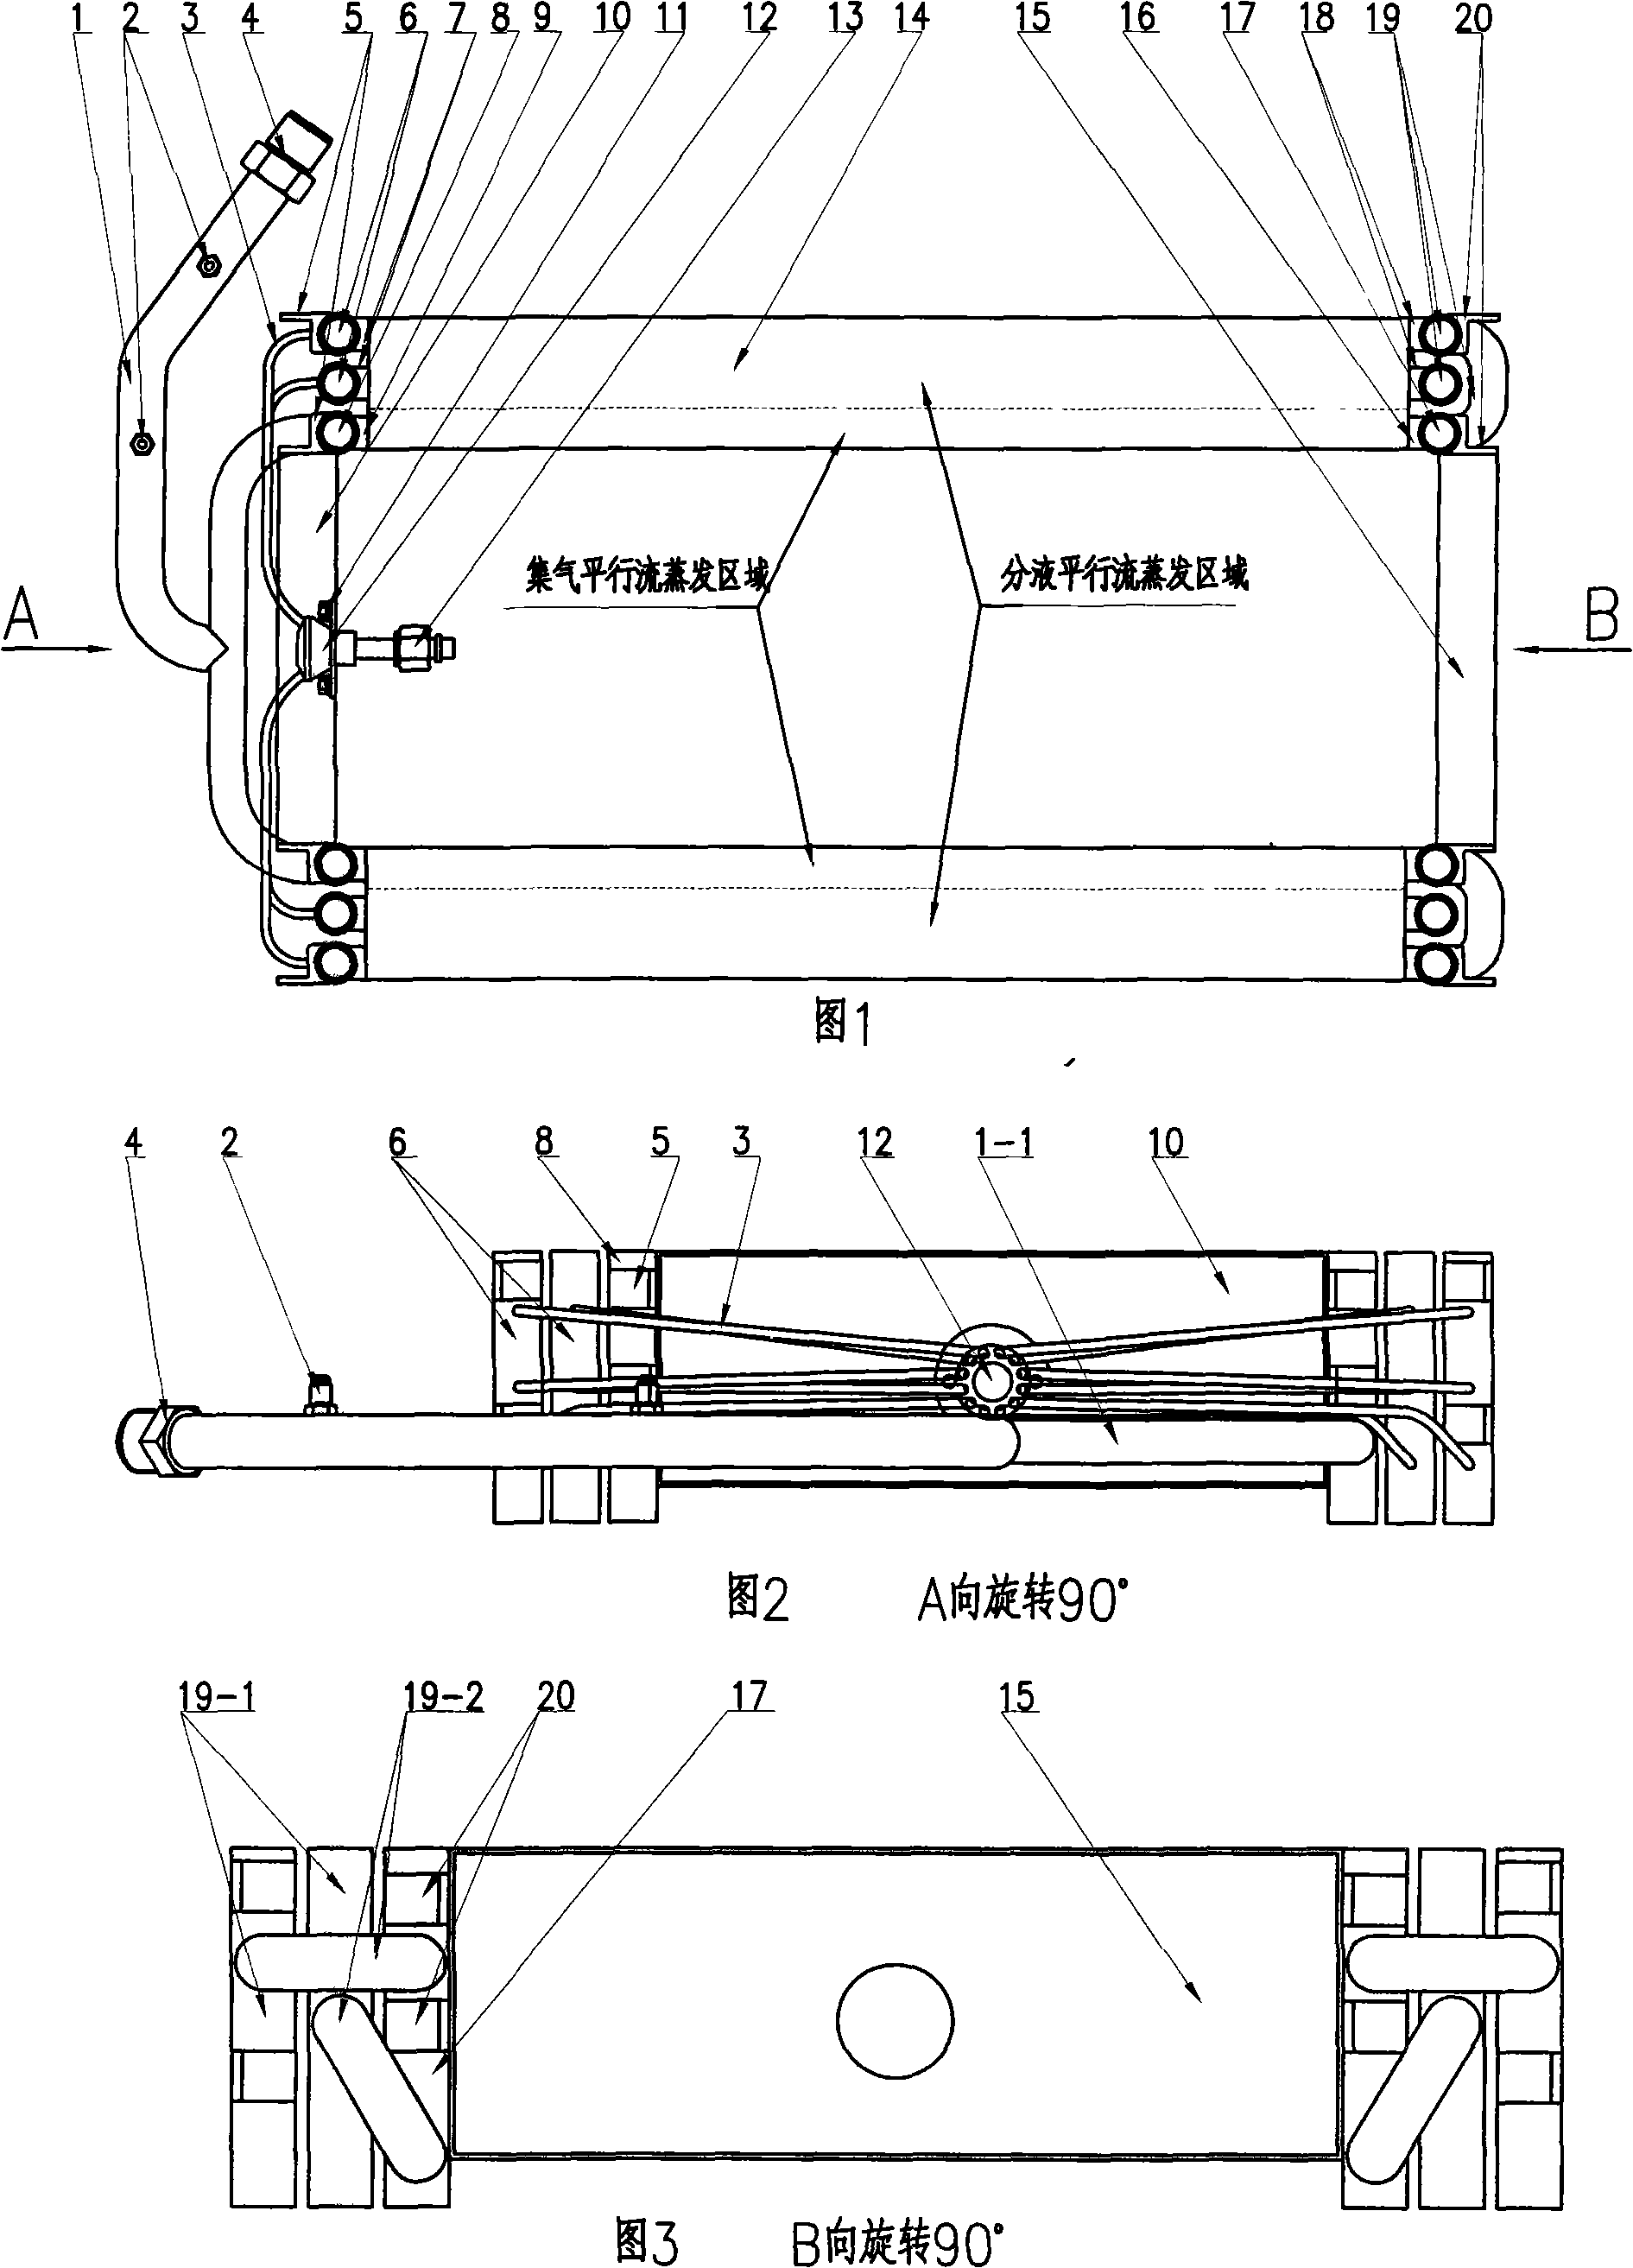 Parallel flow evaporator core structure